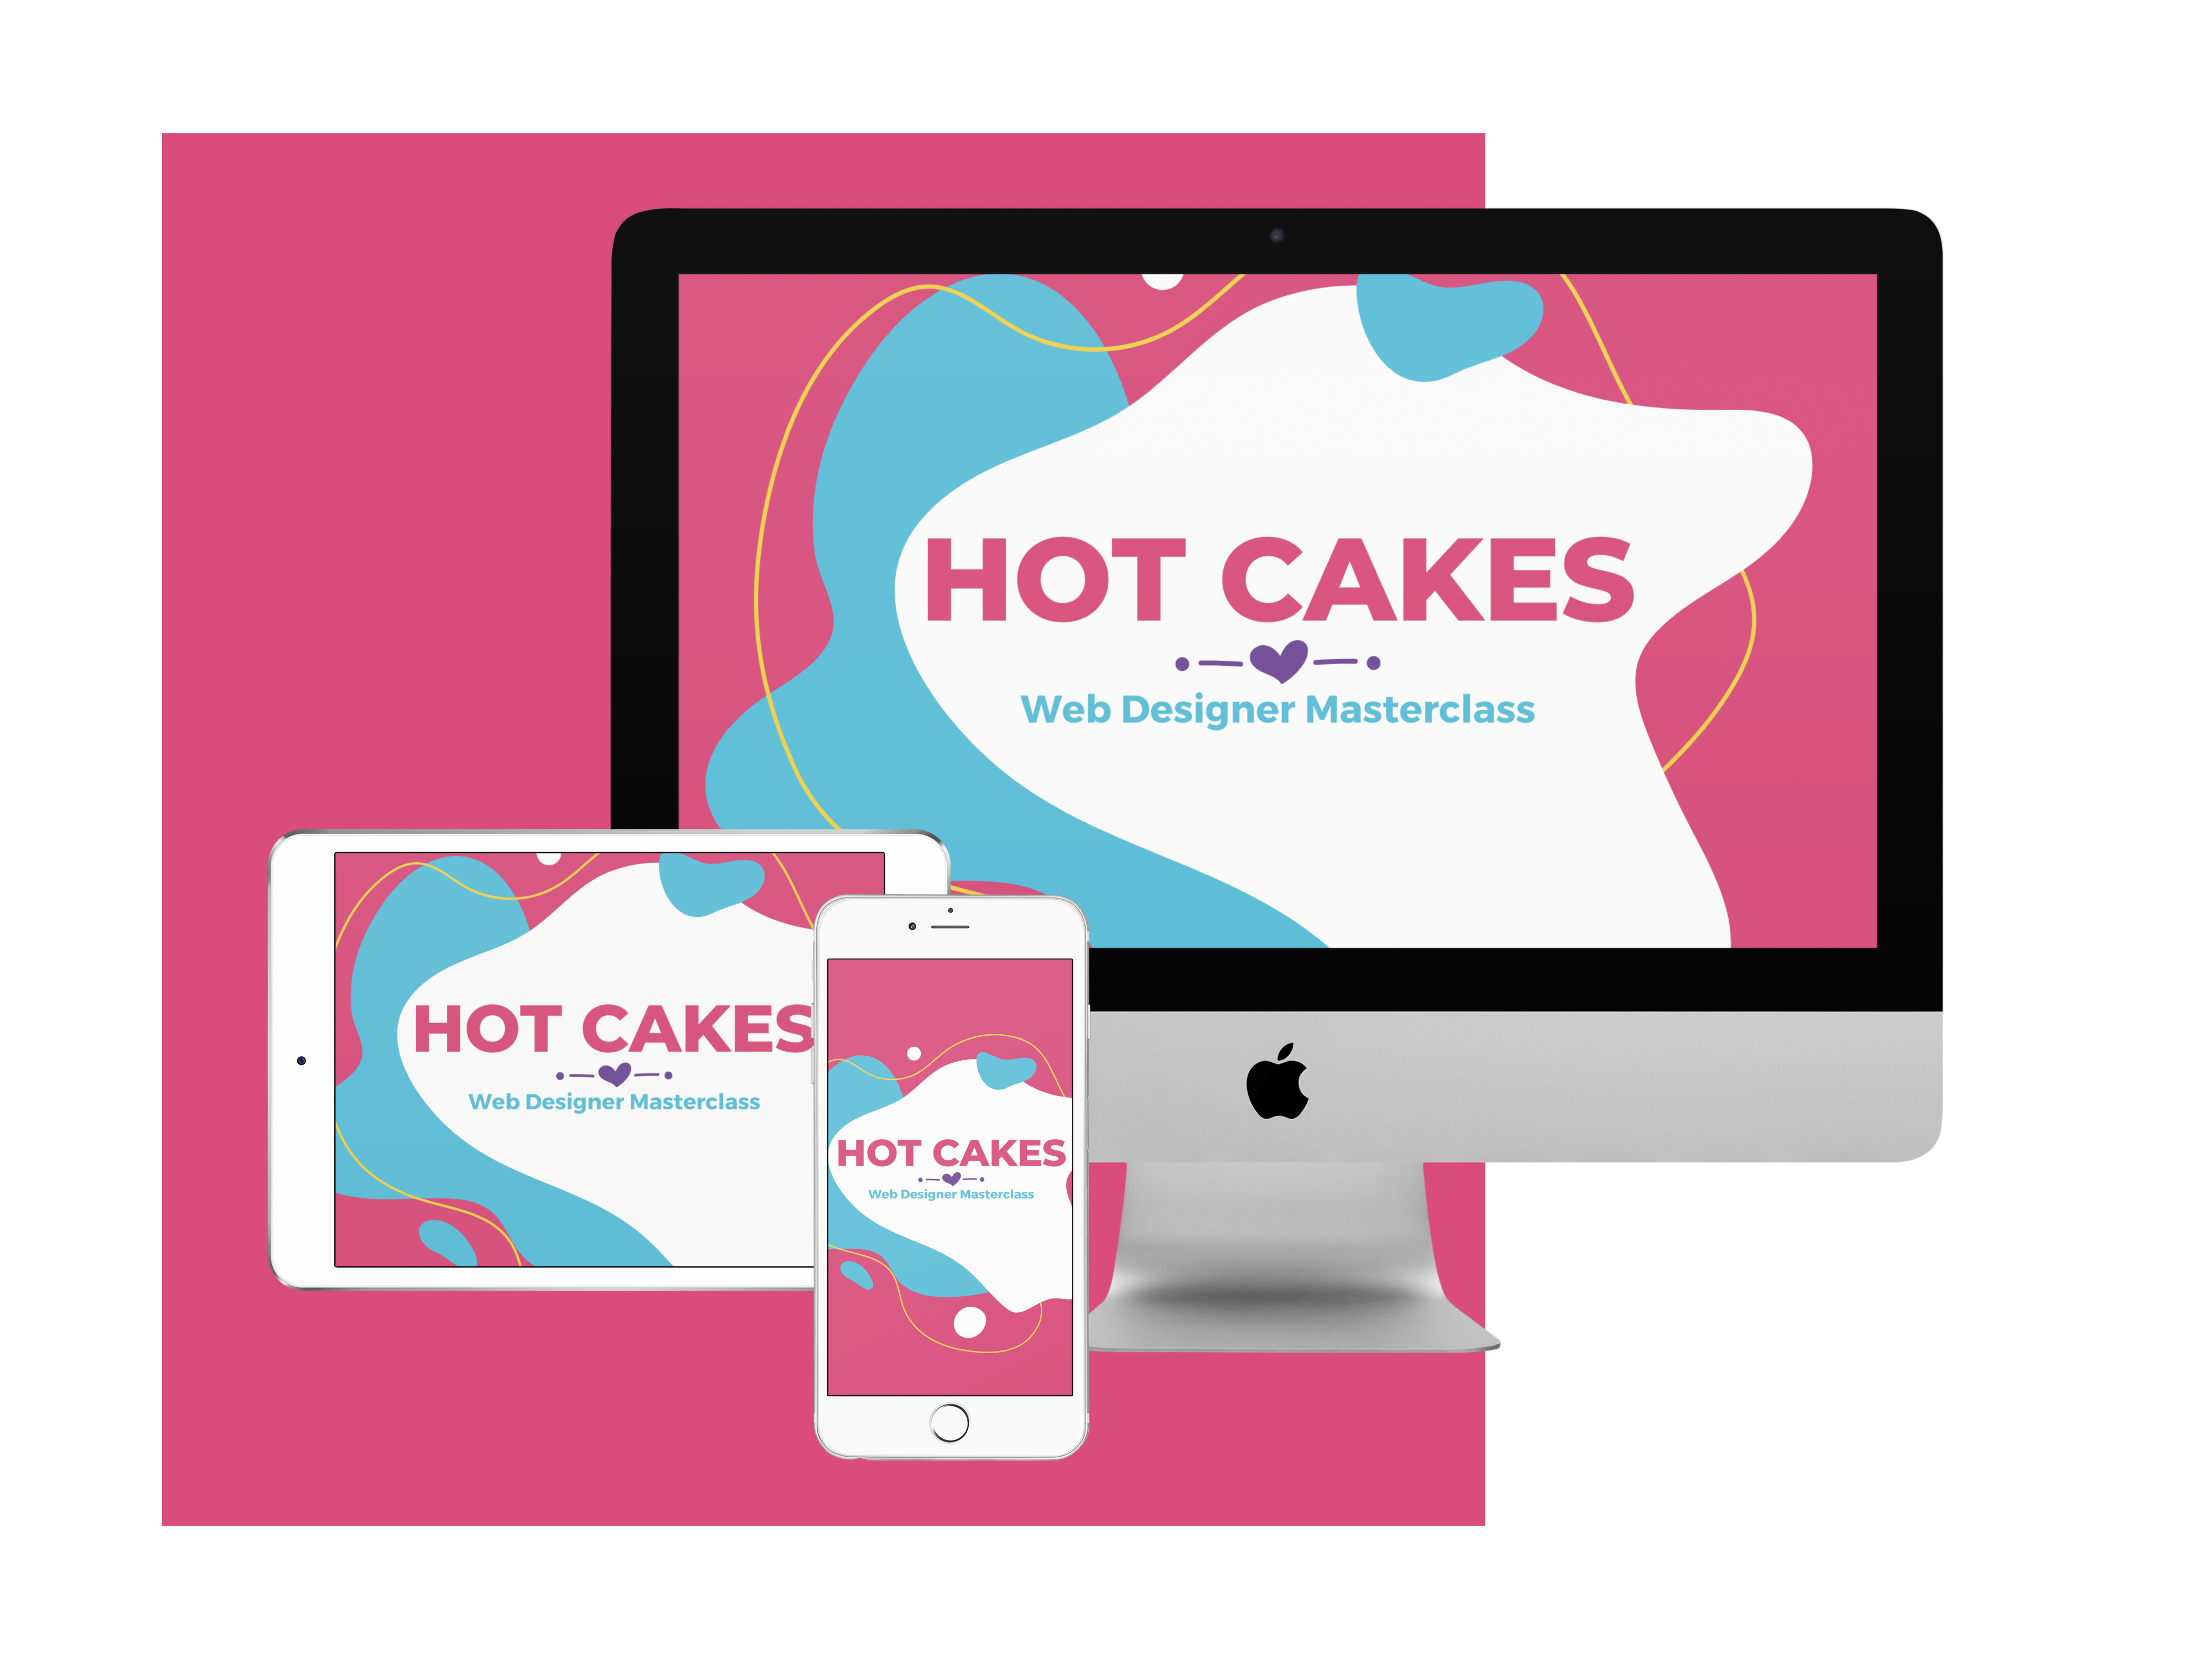 Hot Cakes Web Designer Masterclass